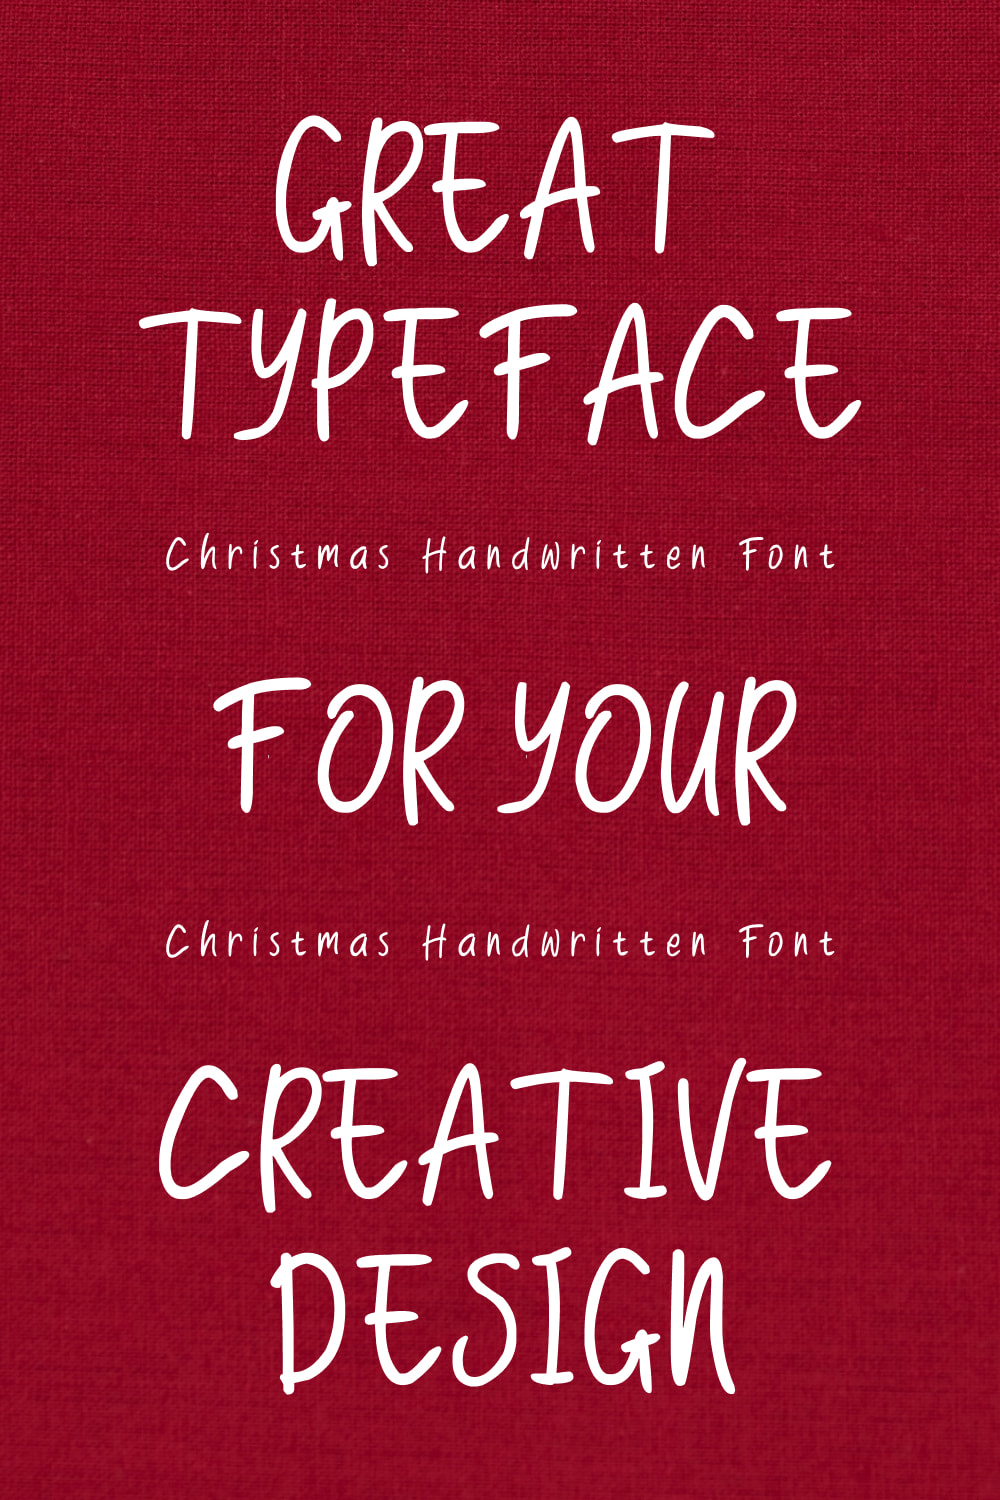 Cursive font for the festive mood.